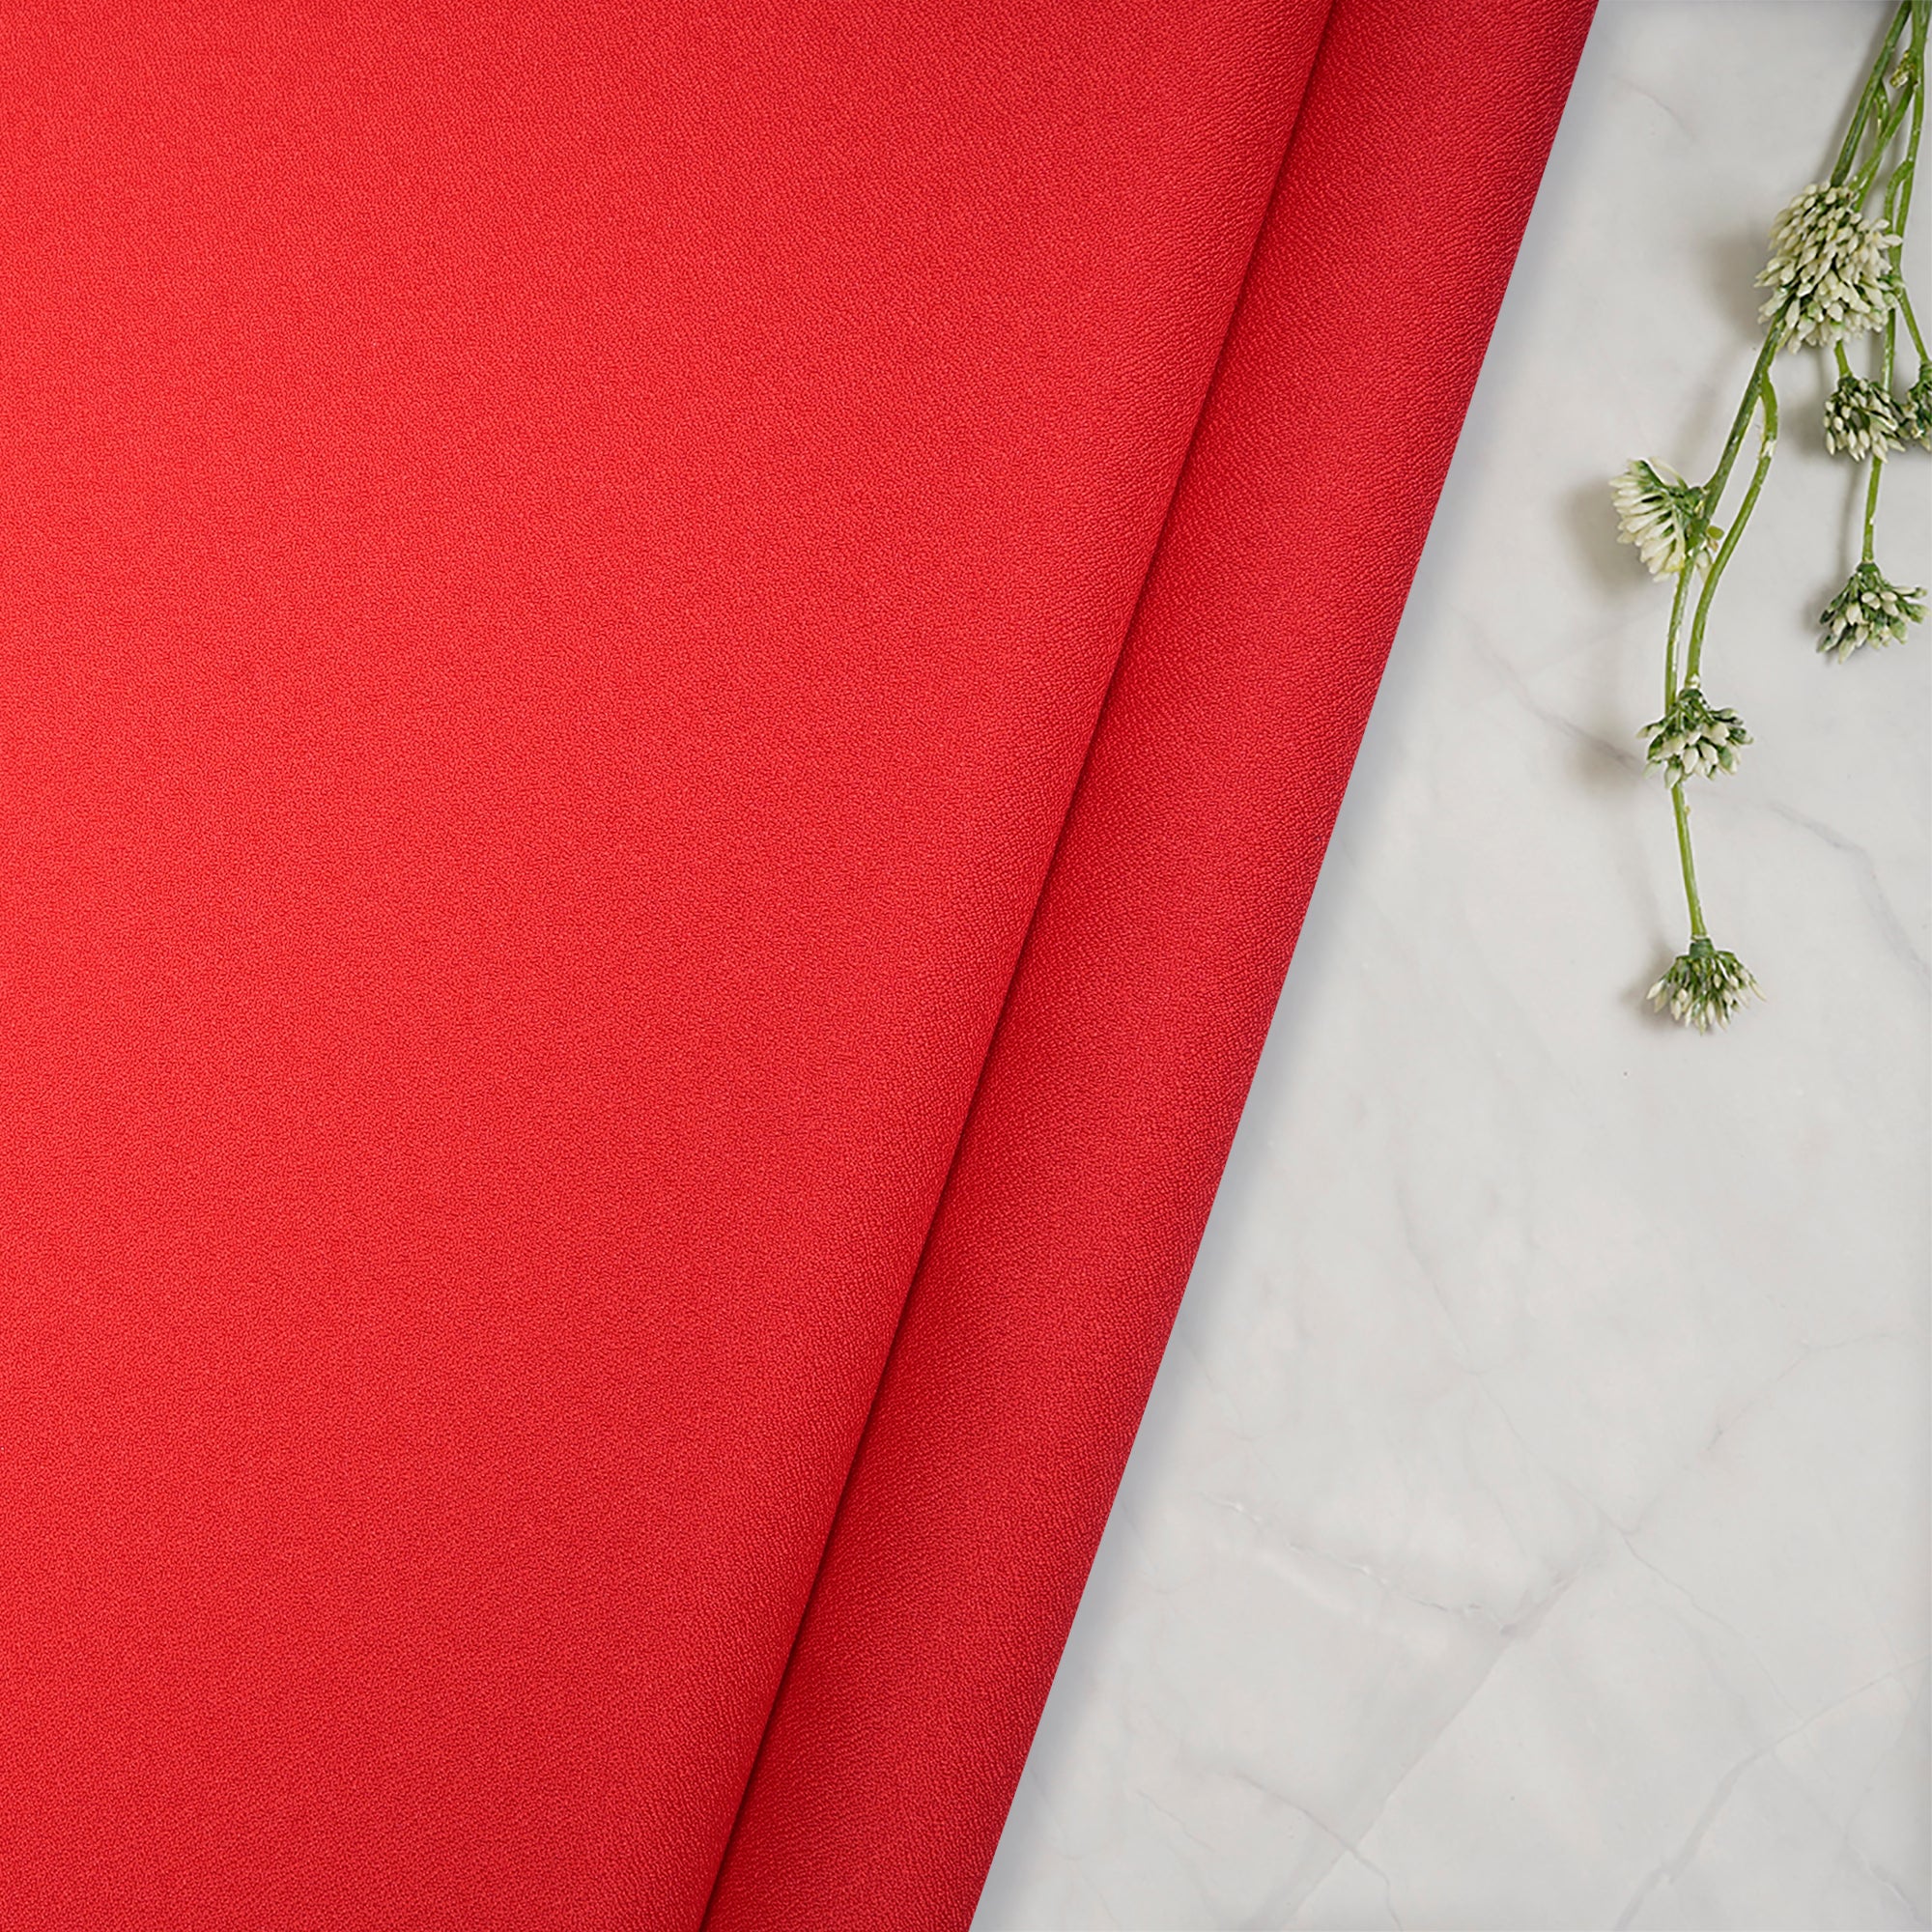 Premium White Red Heart Print Crepe Fabric at Rs 14.00, Udyog Vihar, Gurugram